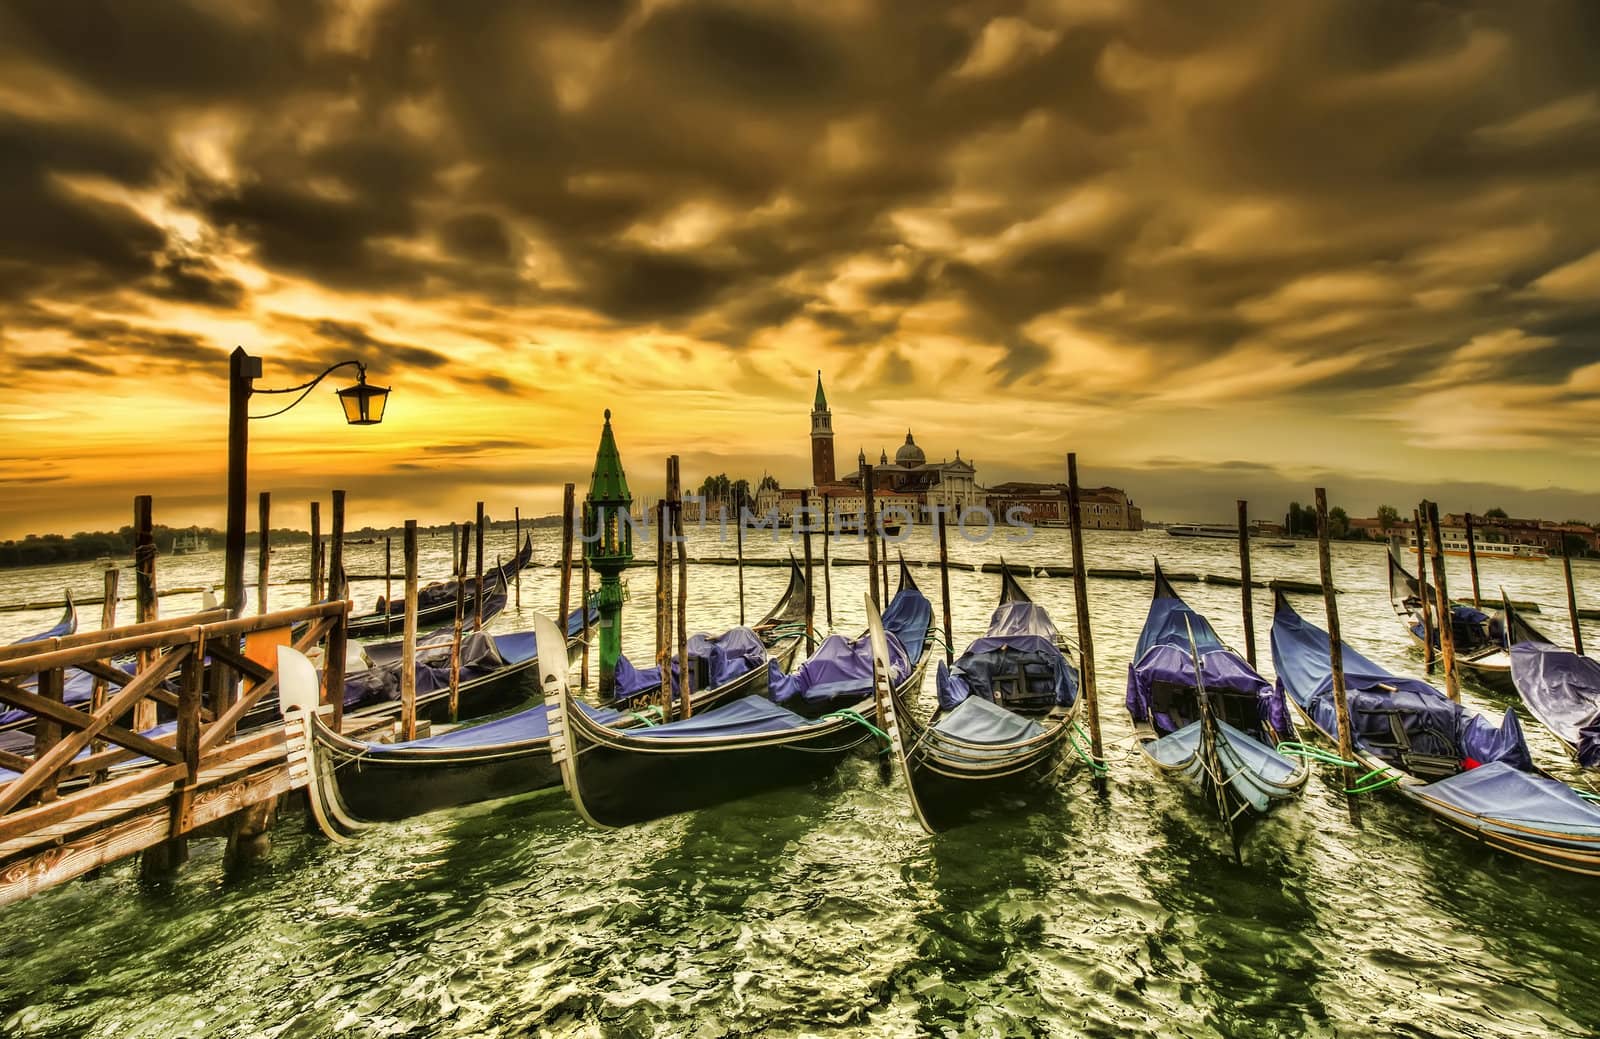 Venice dramatic scene with gondolas at sunset, Italy